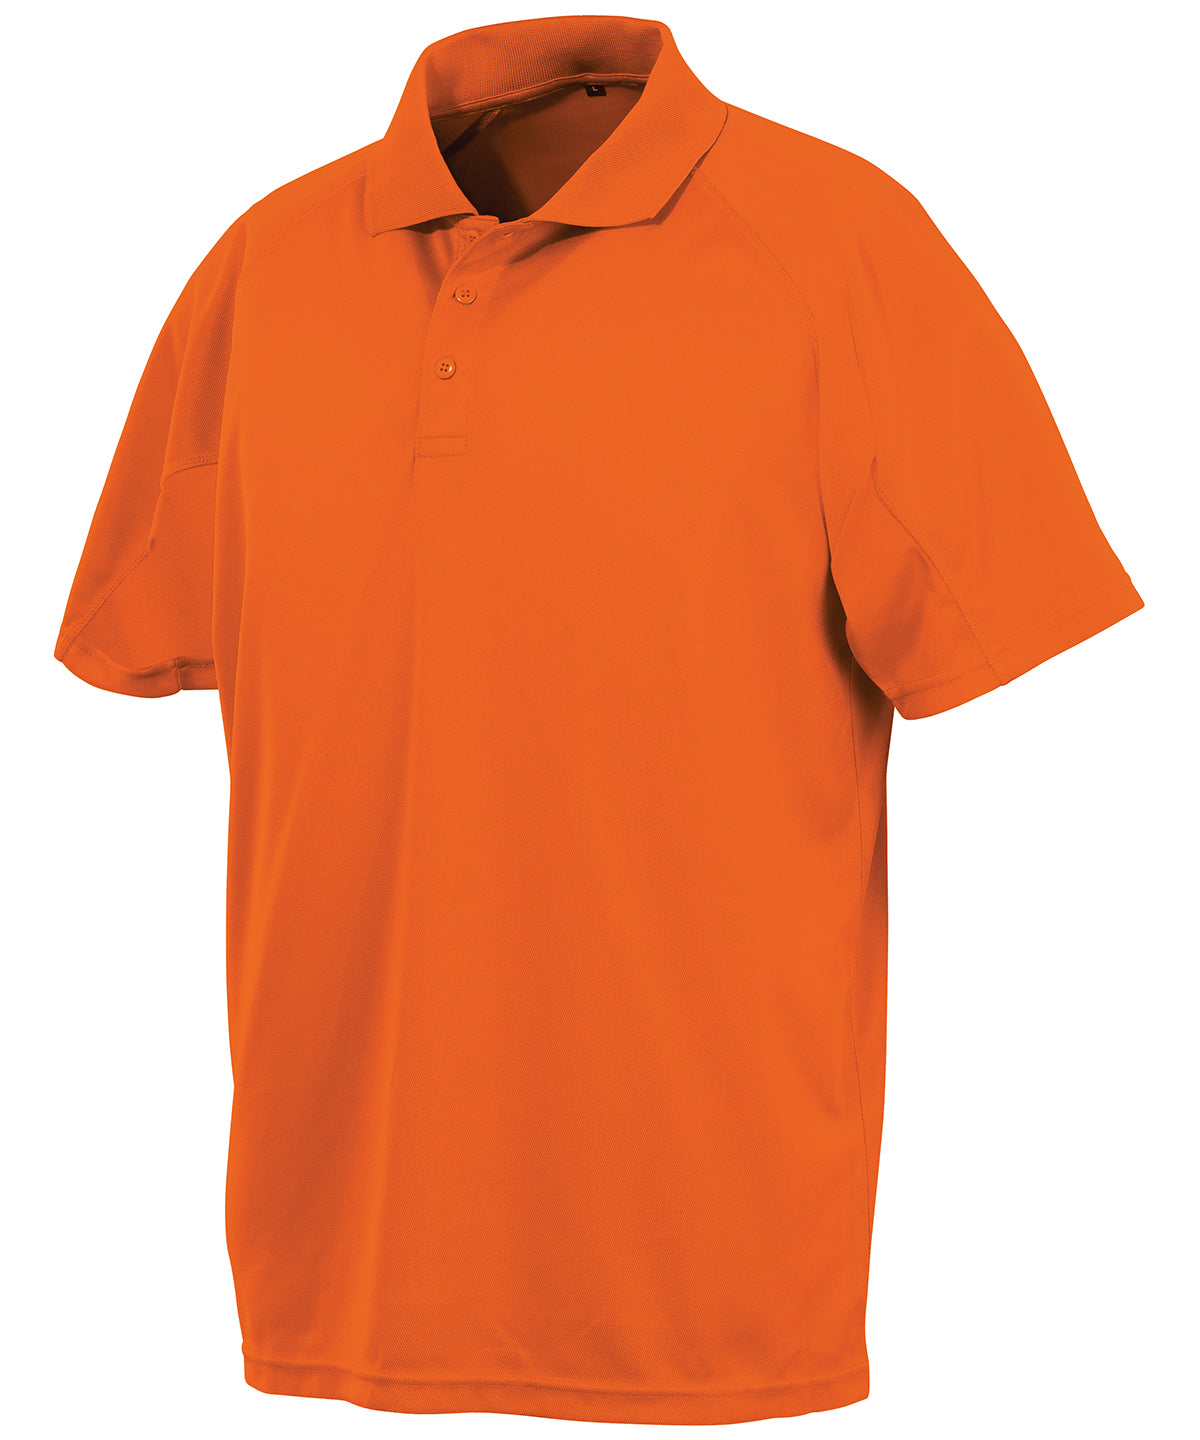 Spiro Performance Aircool Polo Shirt Flo Orange